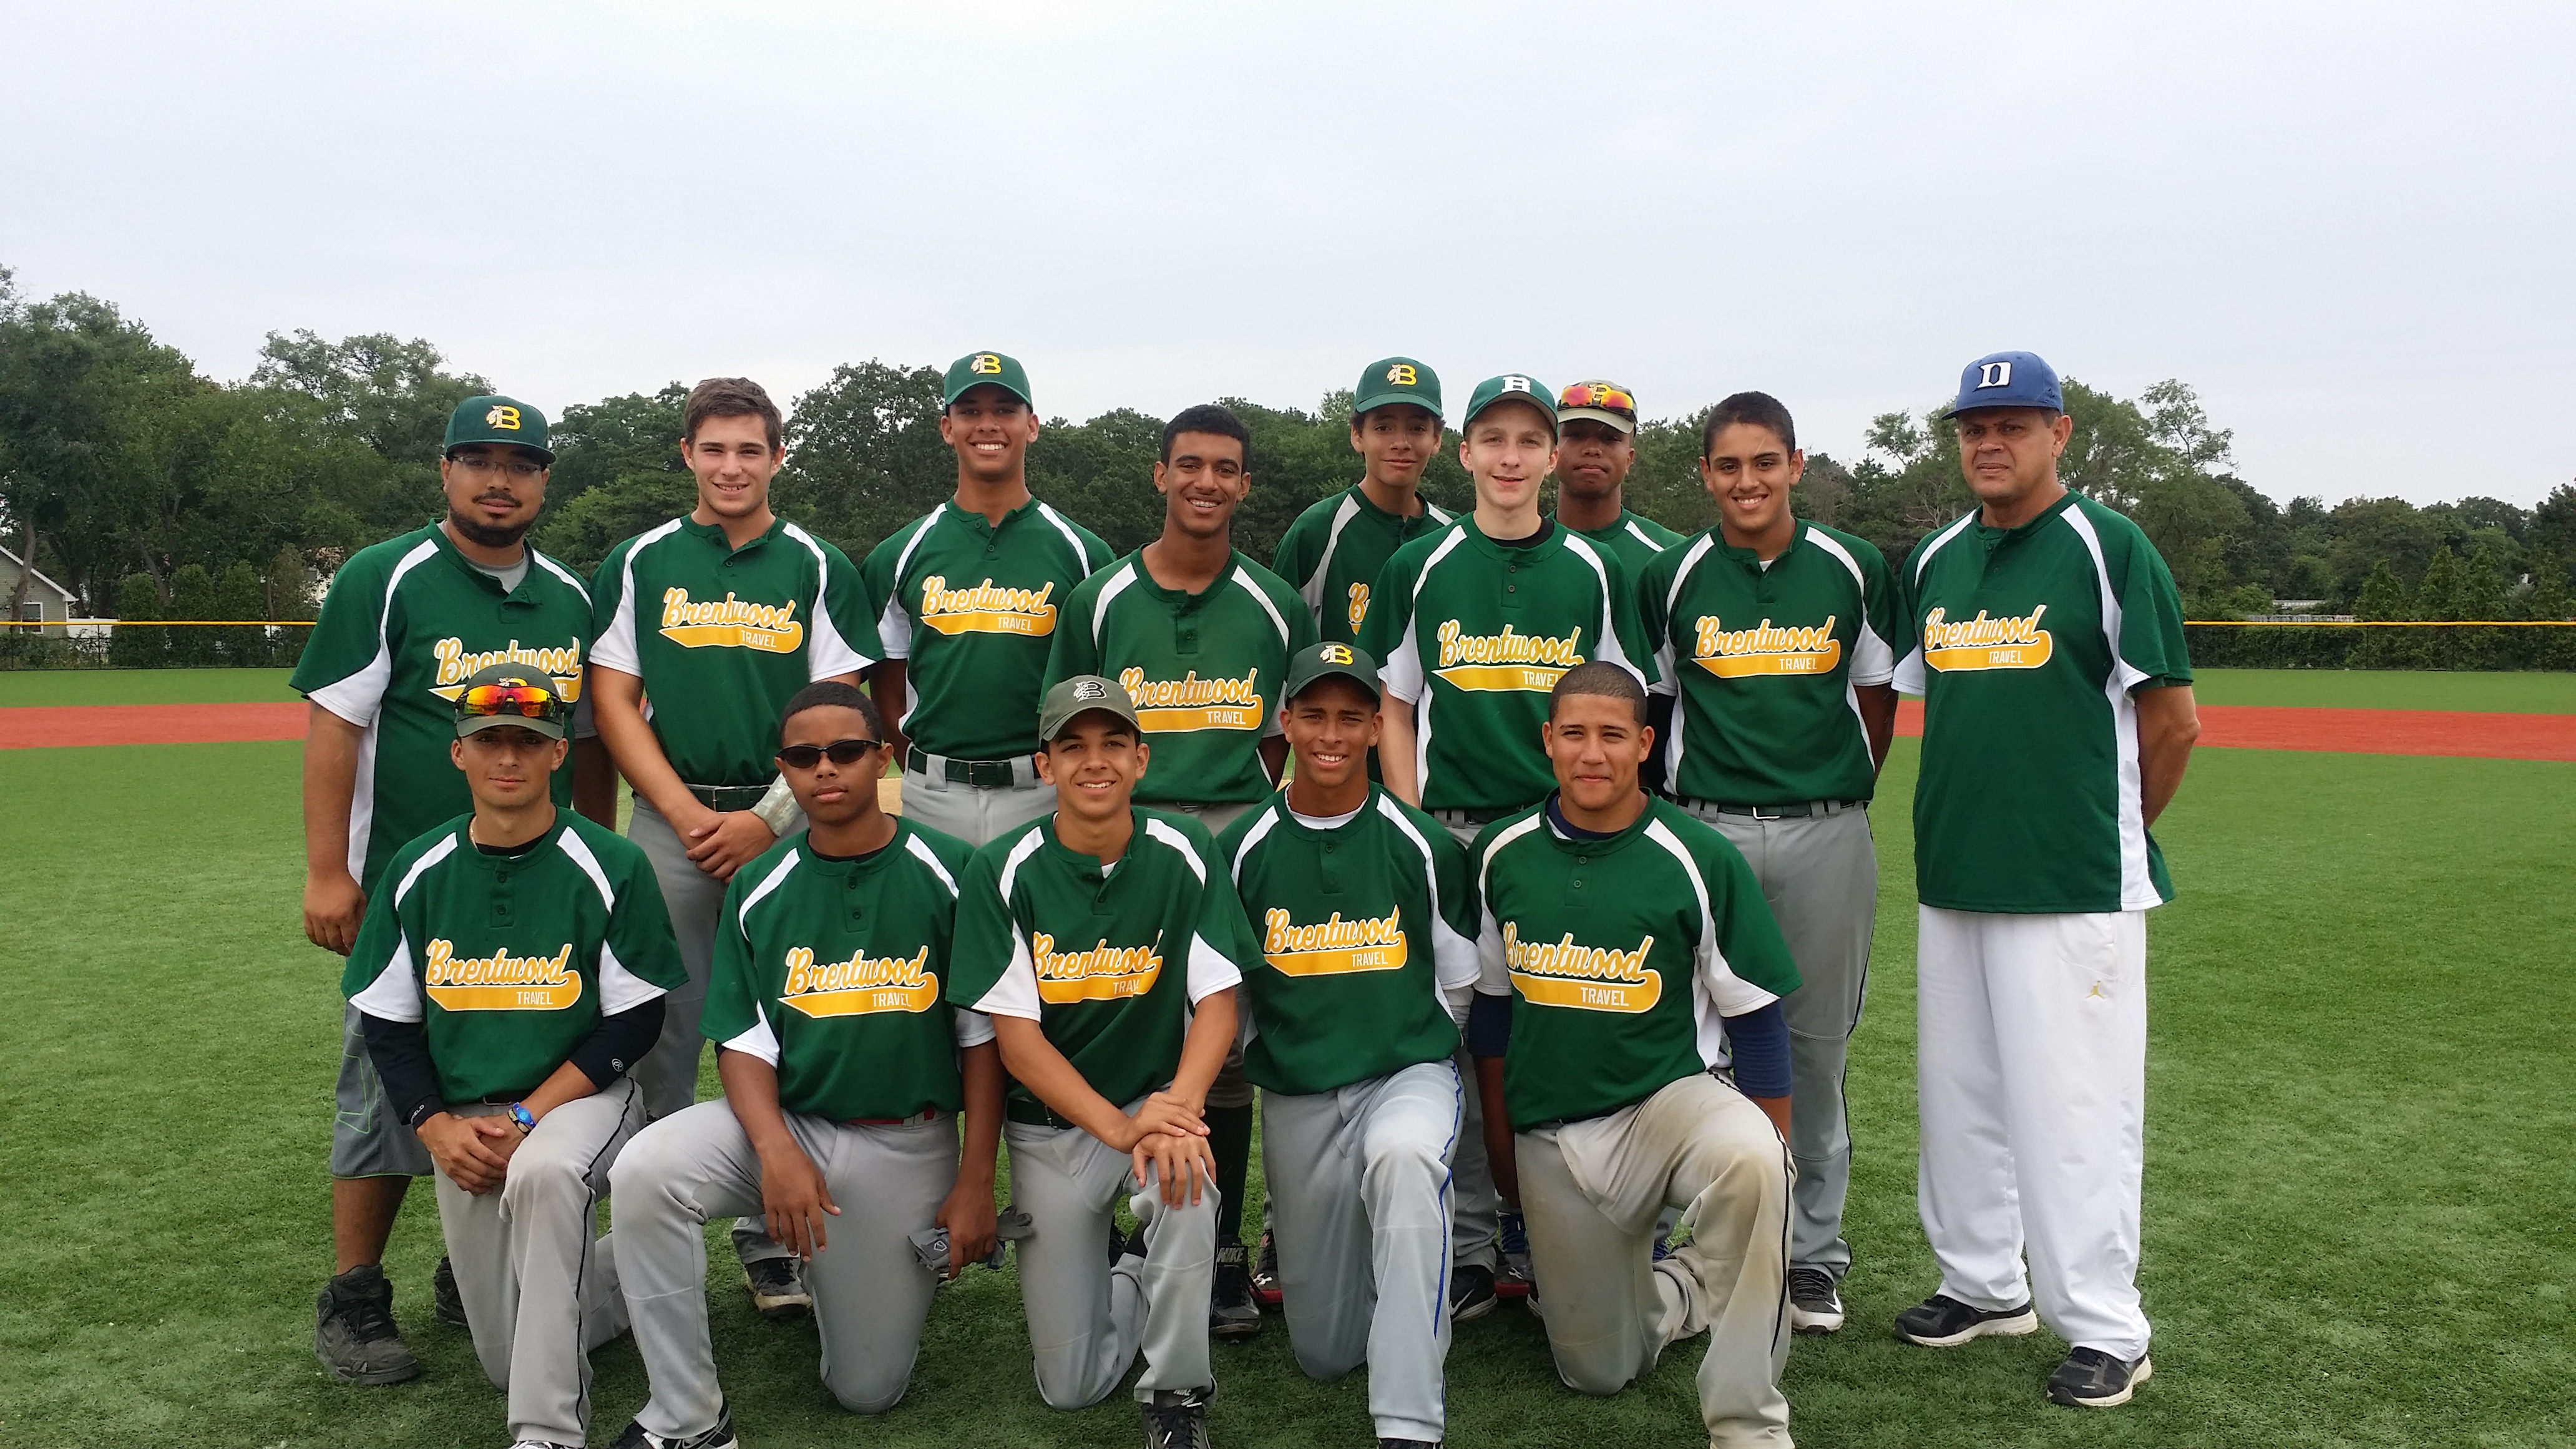 The 2014 Brentwood Braves 16U Travel Team